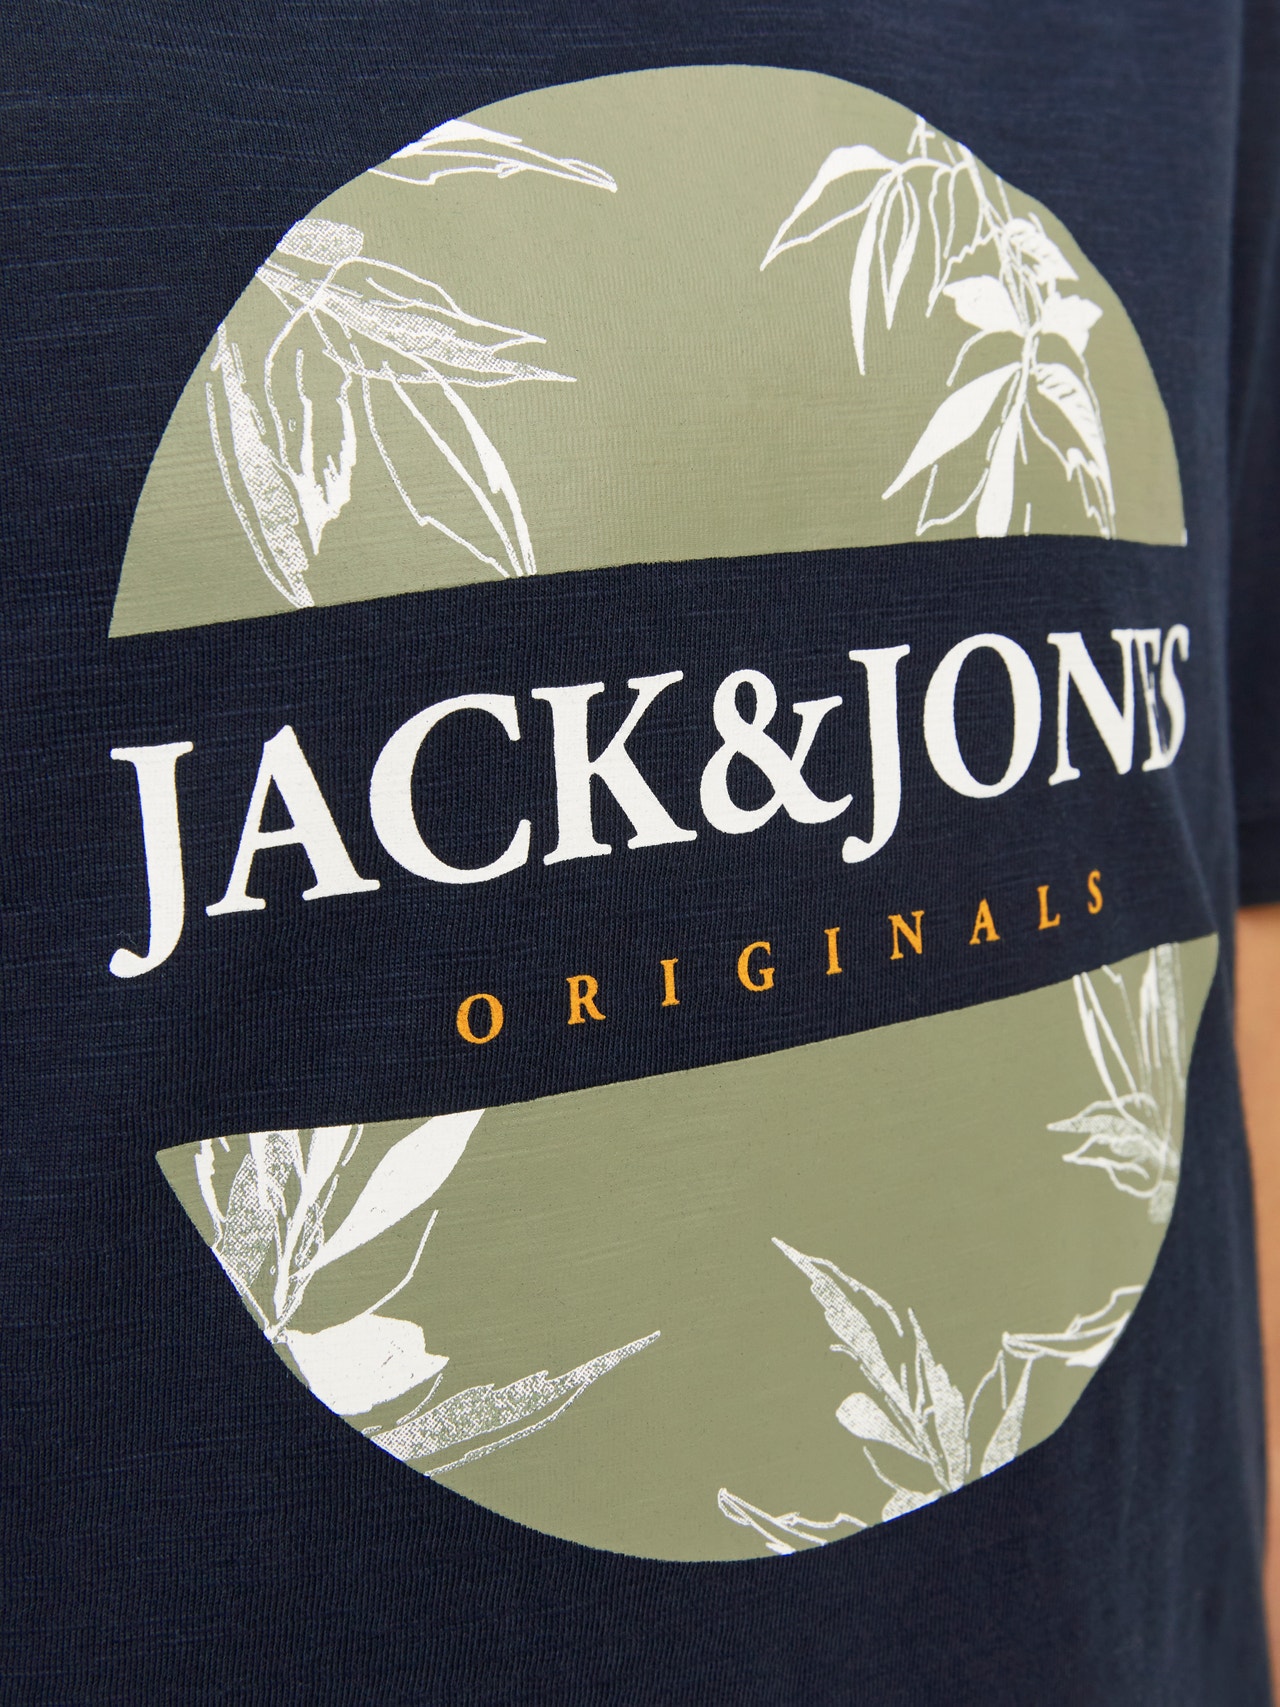 Jack & Jones T-shirt Stampato Per Bambino -Navy Blazer - 12258234